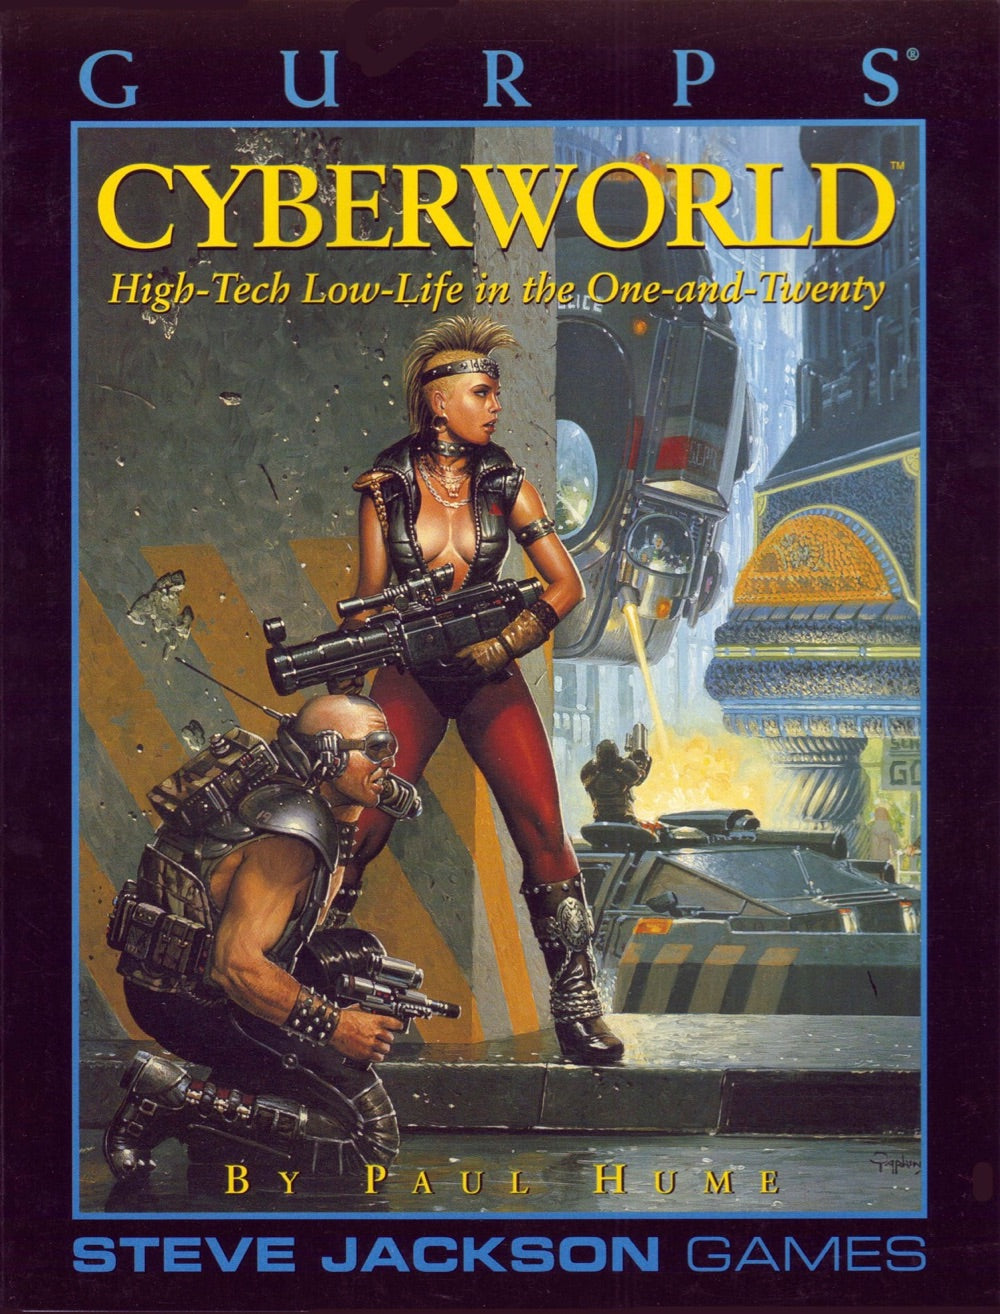 GURPS Classic: Cyberworld